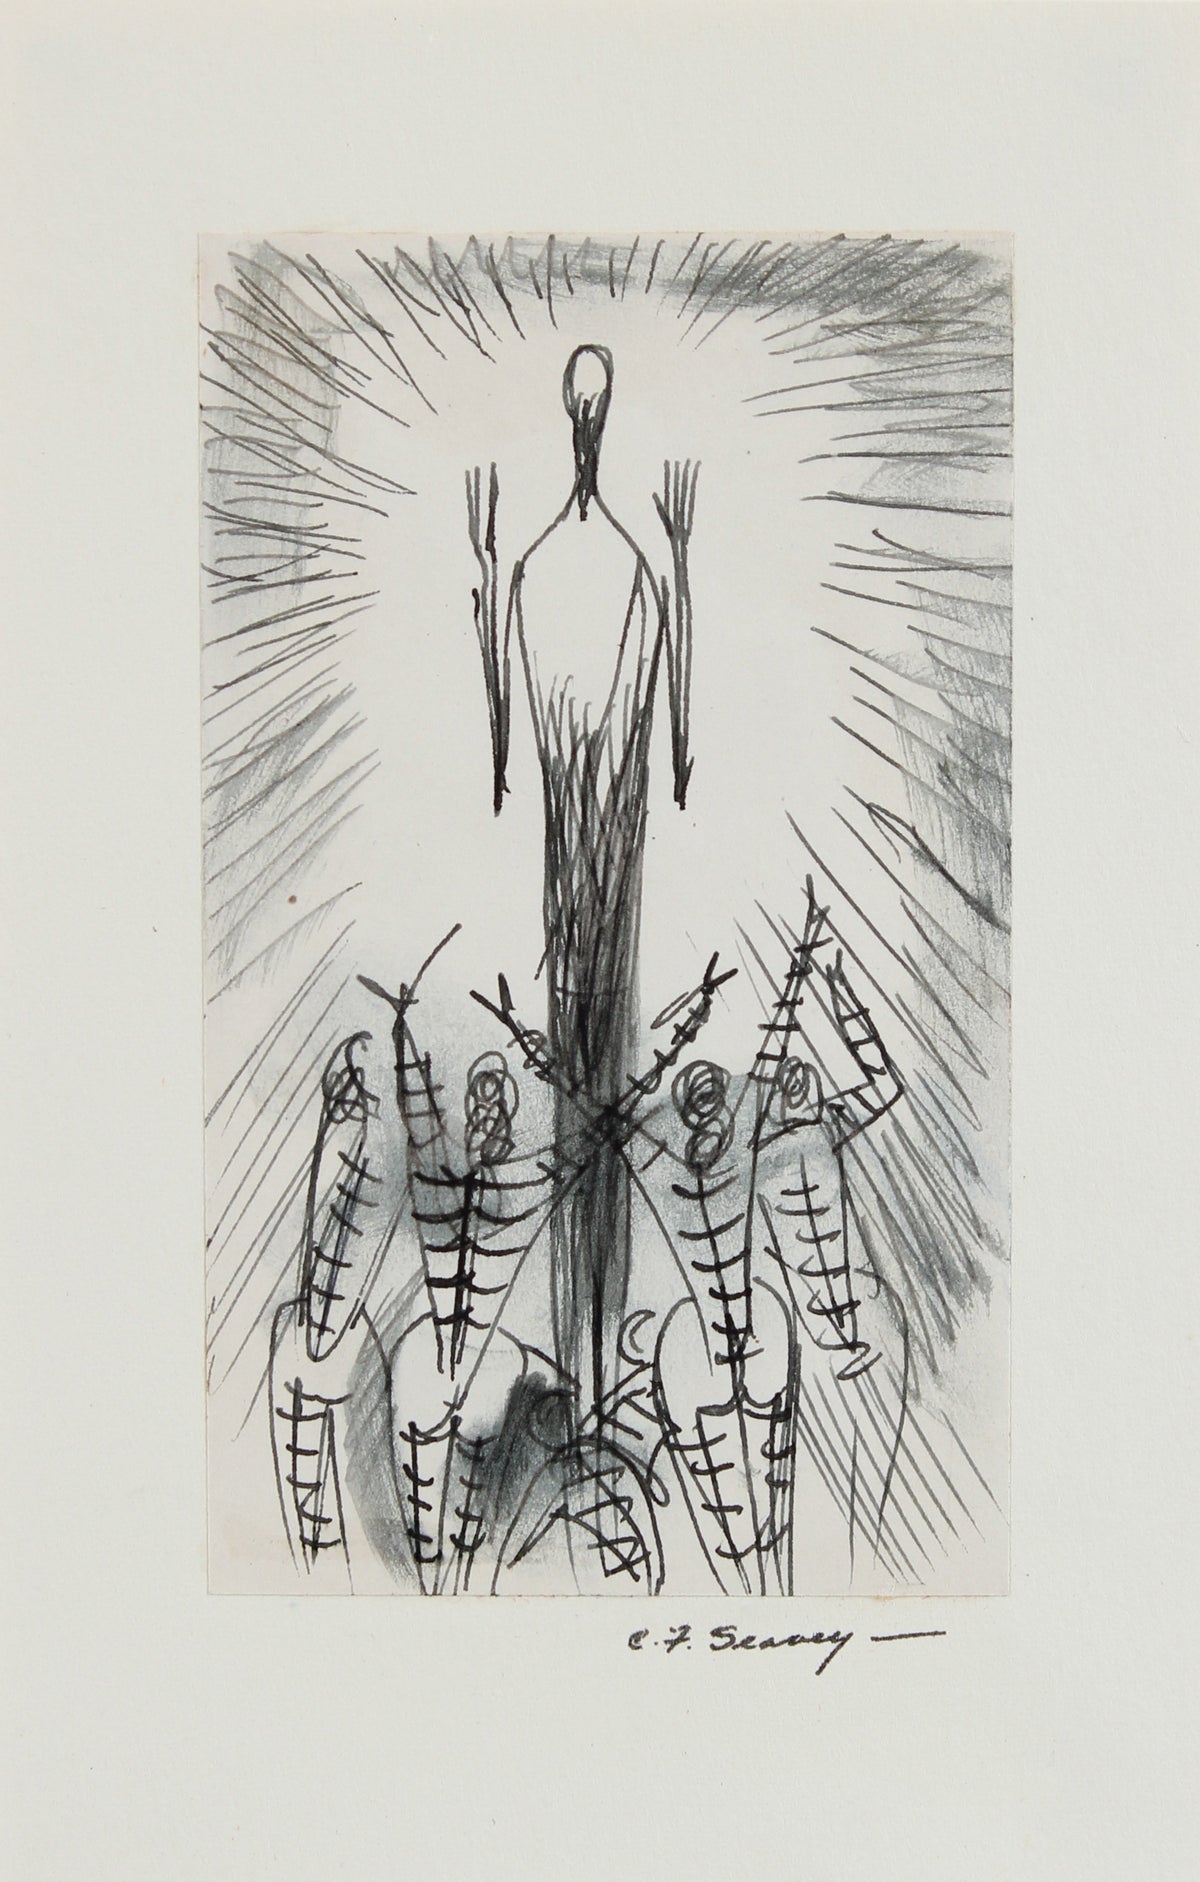 Abstract Figurative Drawing&lt;br&gt;1952 Ink&lt;br&gt;&lt;br&gt;#3512